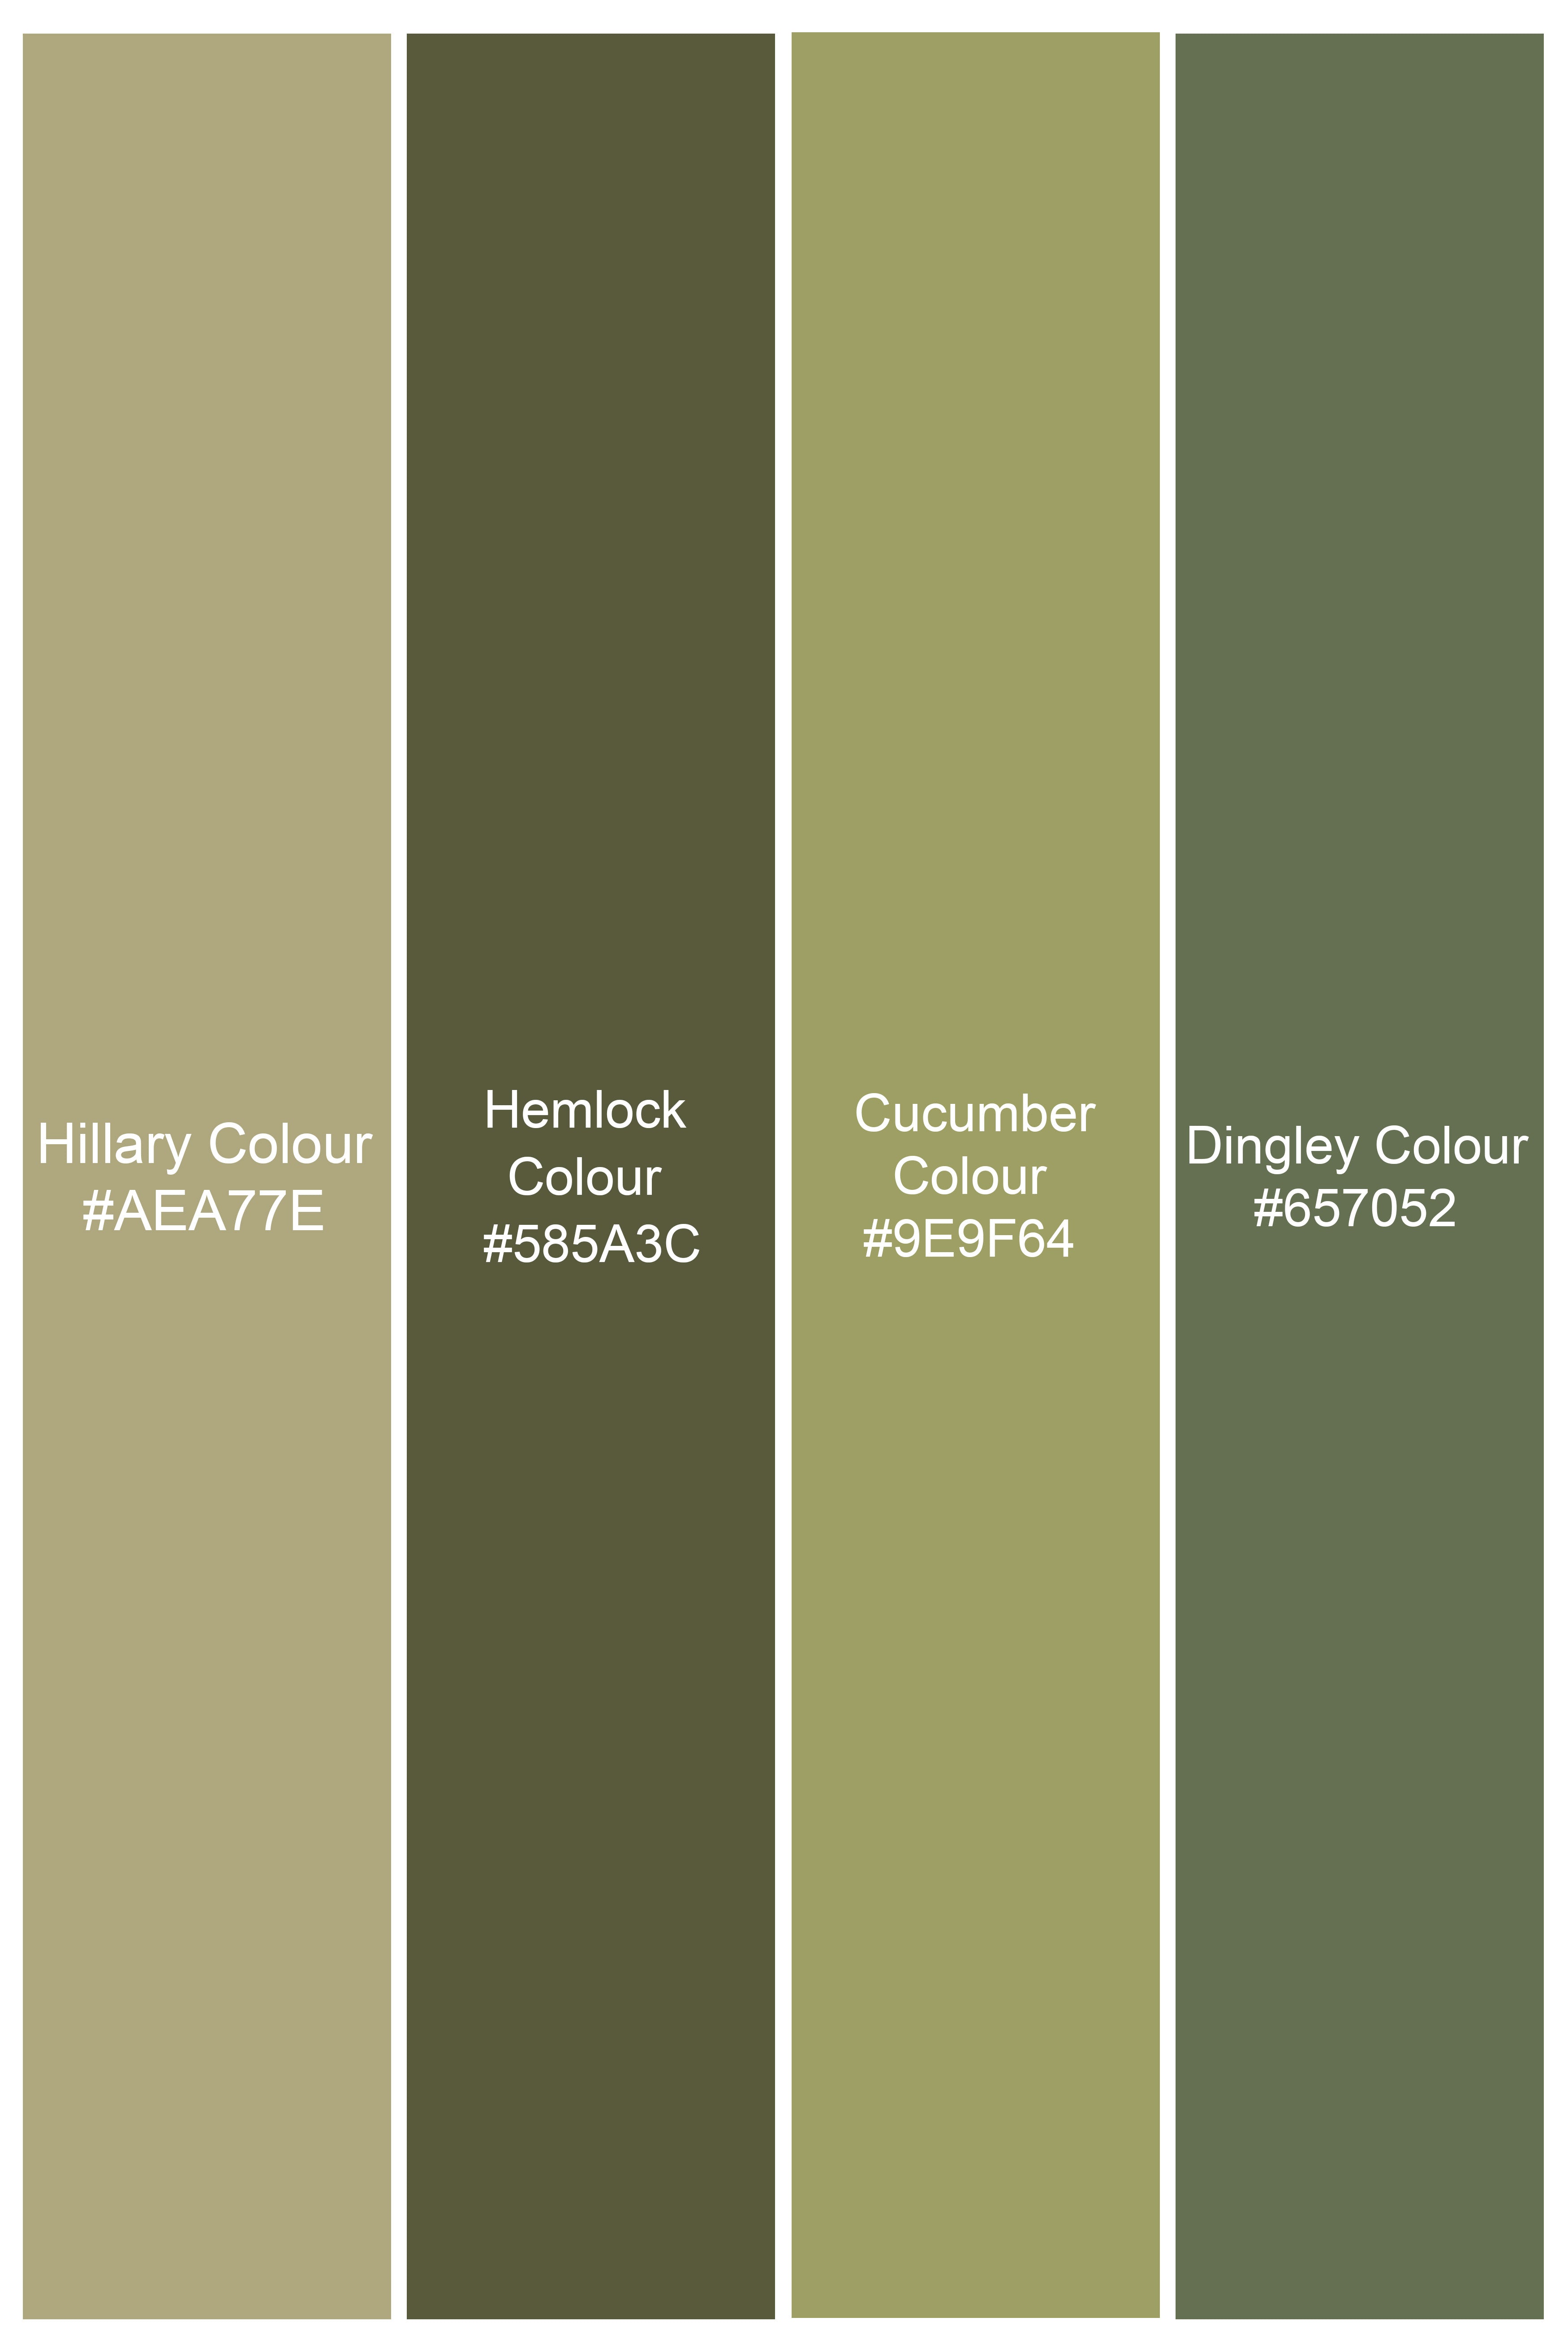 Hillary Beige with Hemlock Green Camouflage Cargo Shorts SR273-28, SR273-30, SR273-32, SR273-34, SR273-36, SR273-38, SR273-40, SR273-42, SR273-44